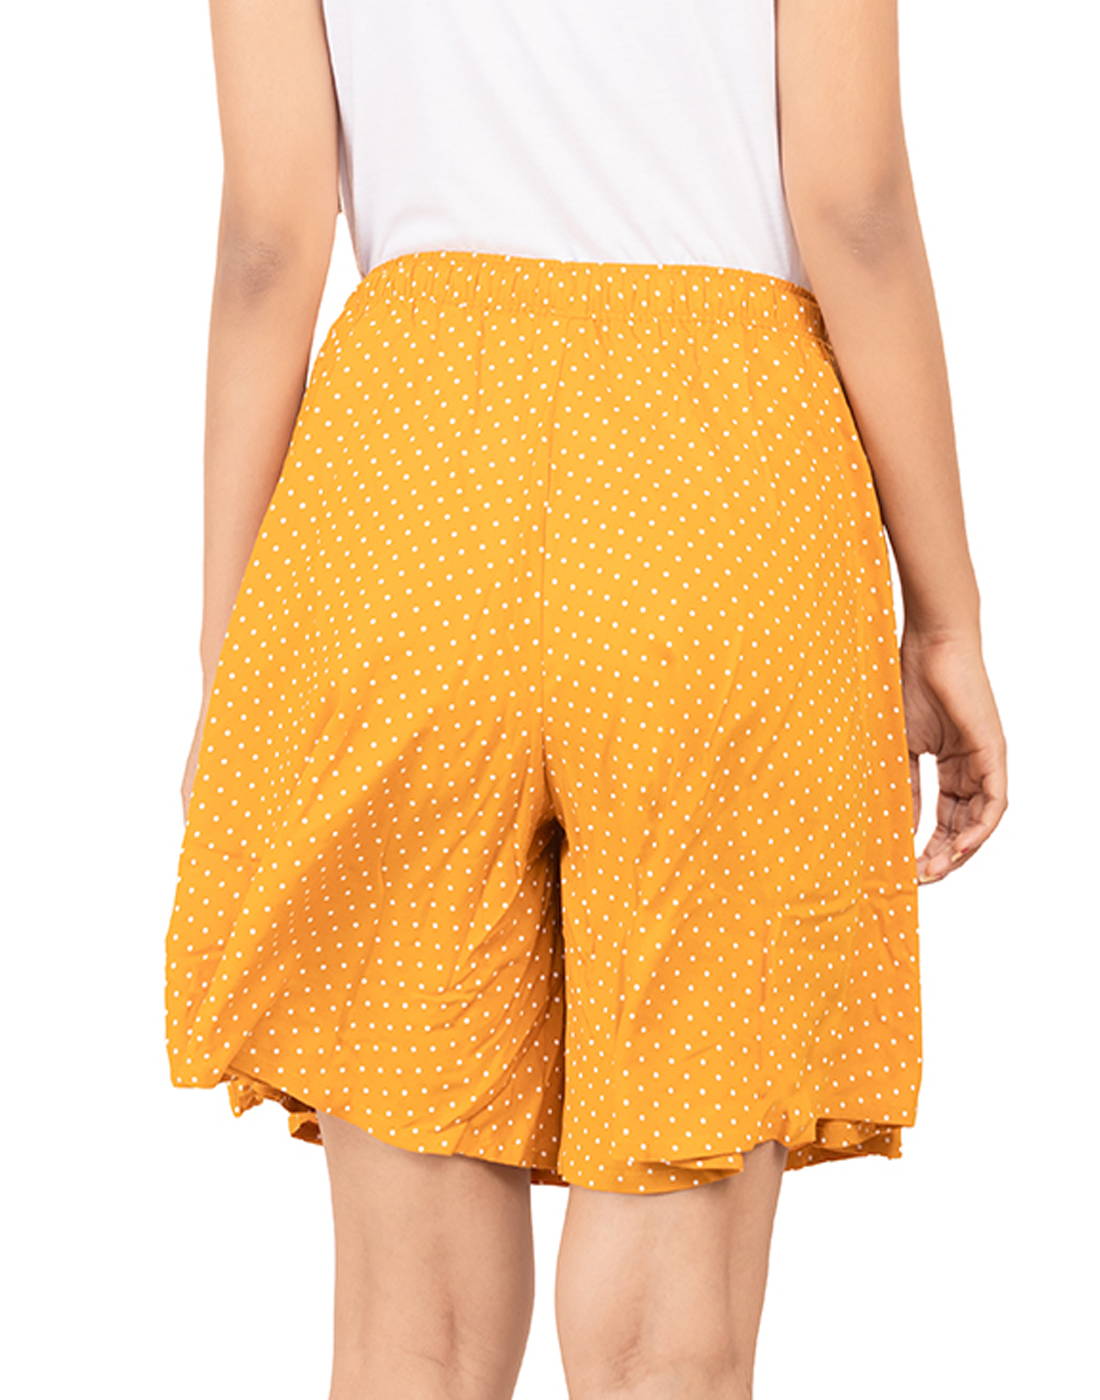 Culotte Shorts for Women-Mustard Print